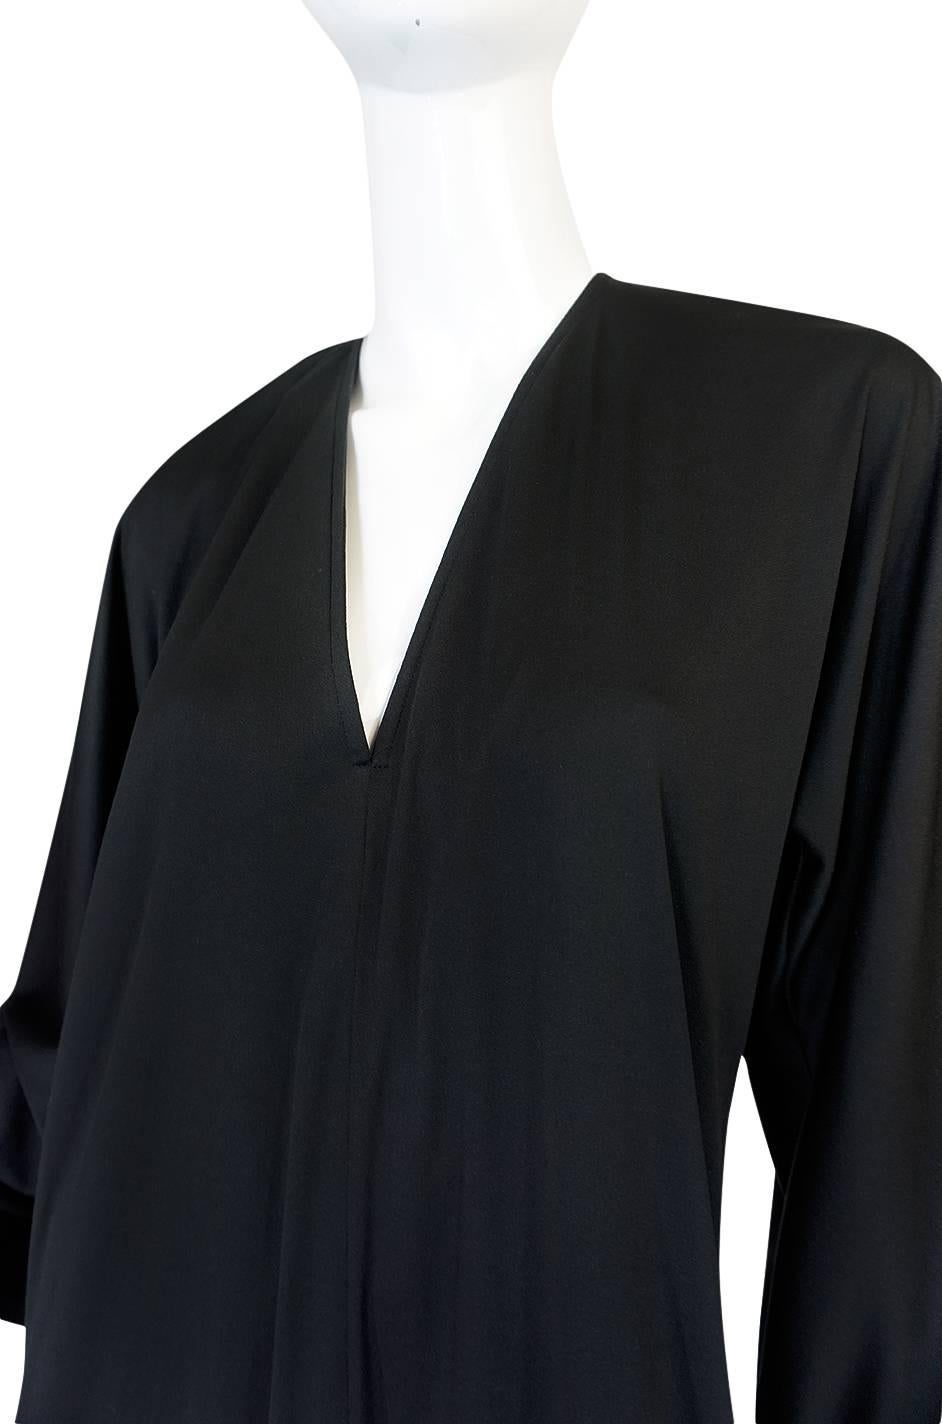 1970s Halston Simple & Chic Black Jersey Caftan Dress 2